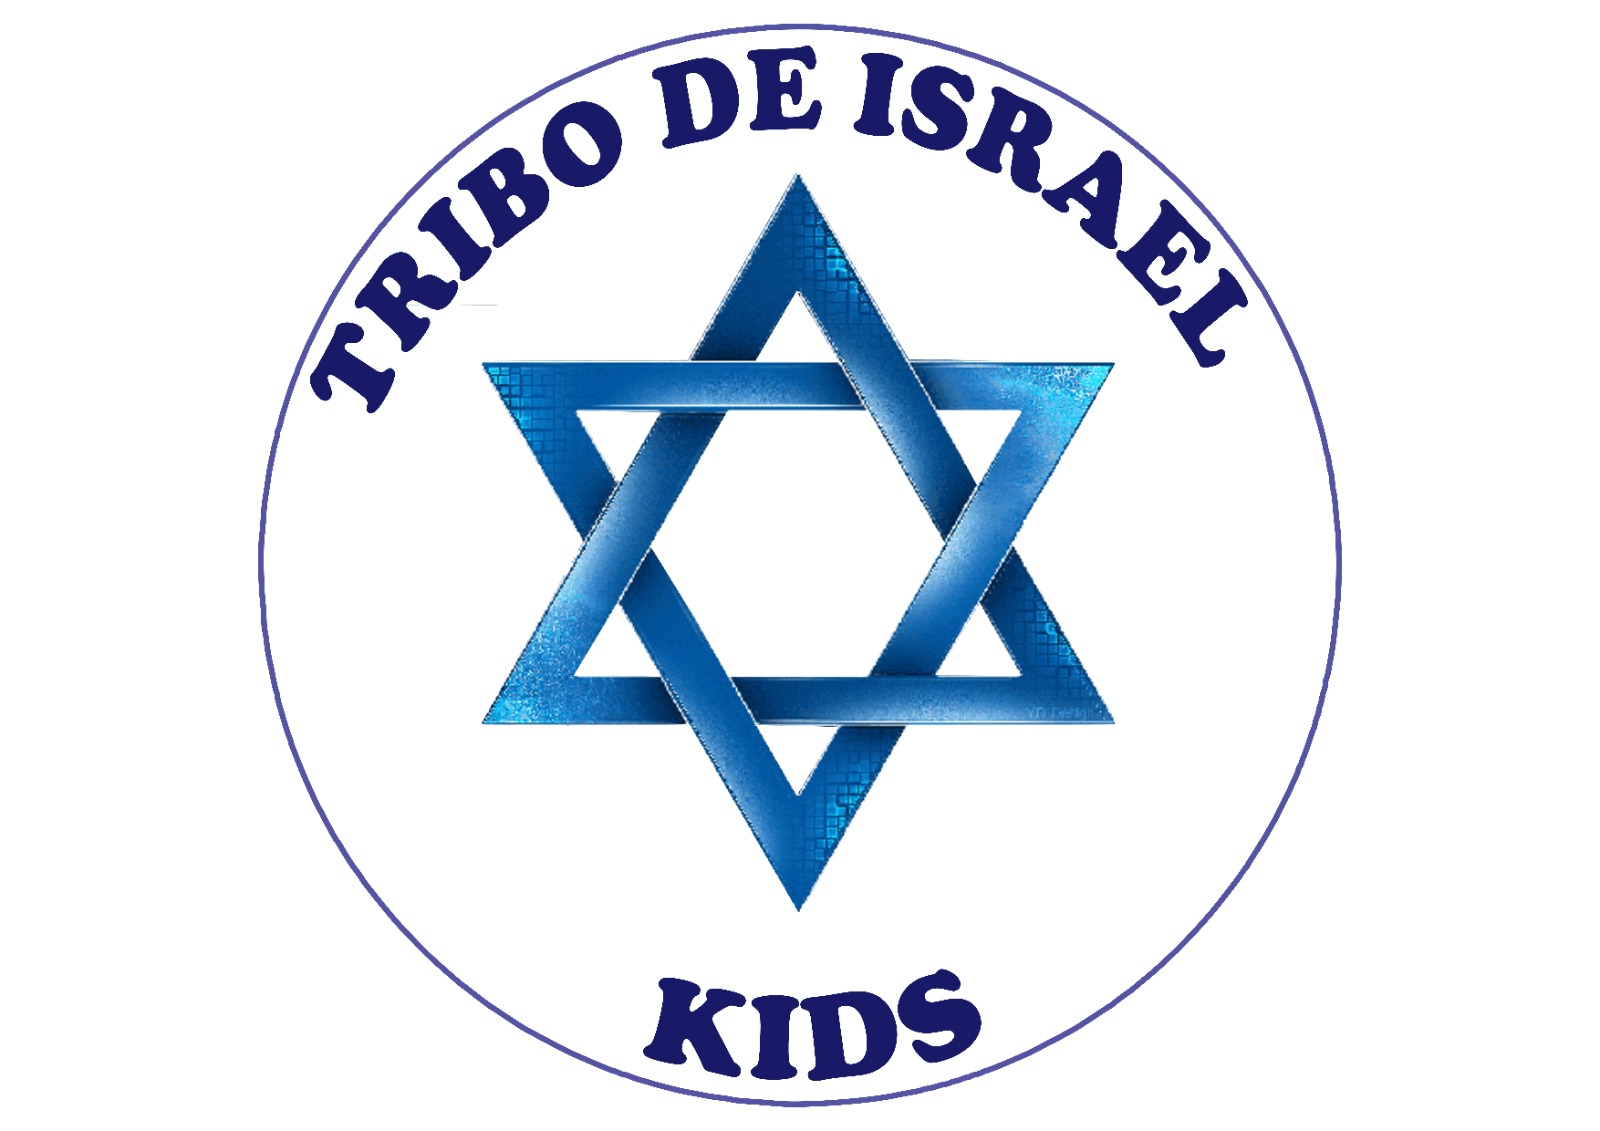 Tribos de Israel Kids